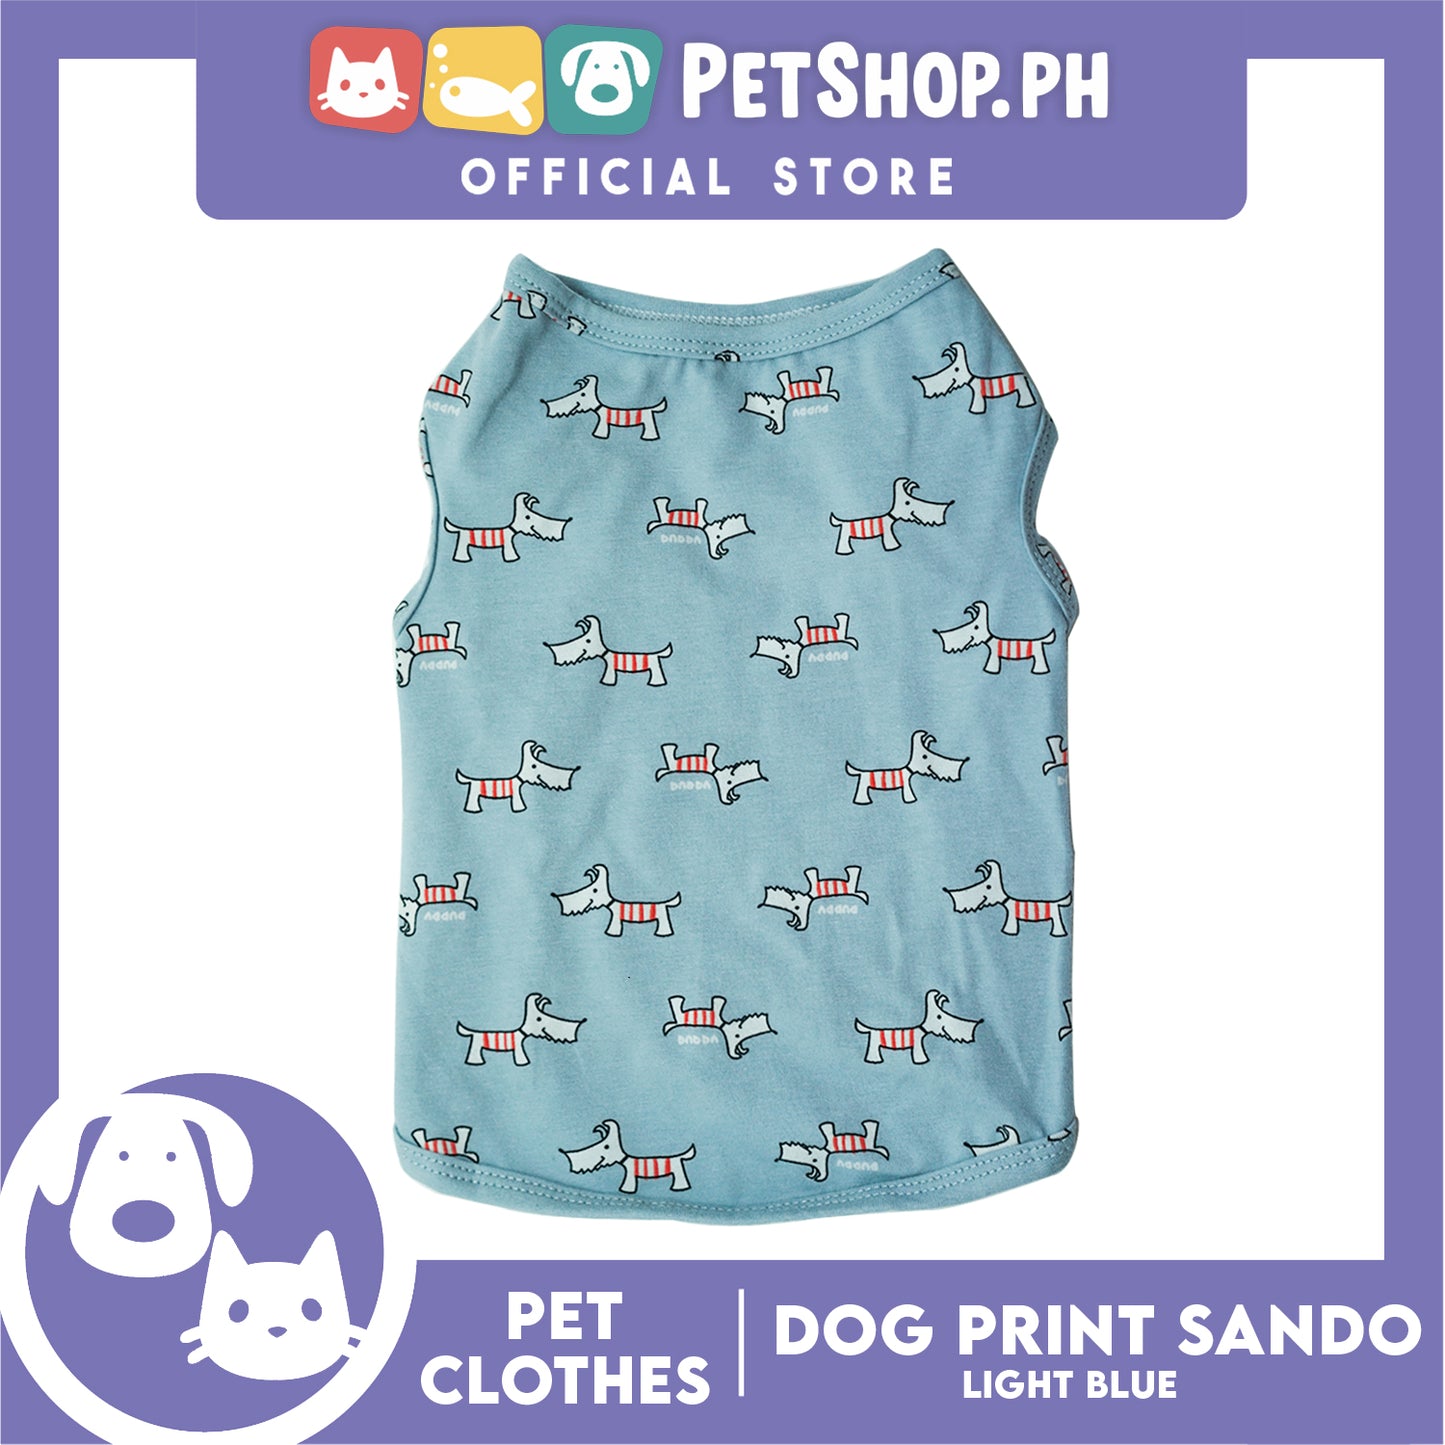 Pet Sando (Extra Large) Light Blue with Dog Print Design